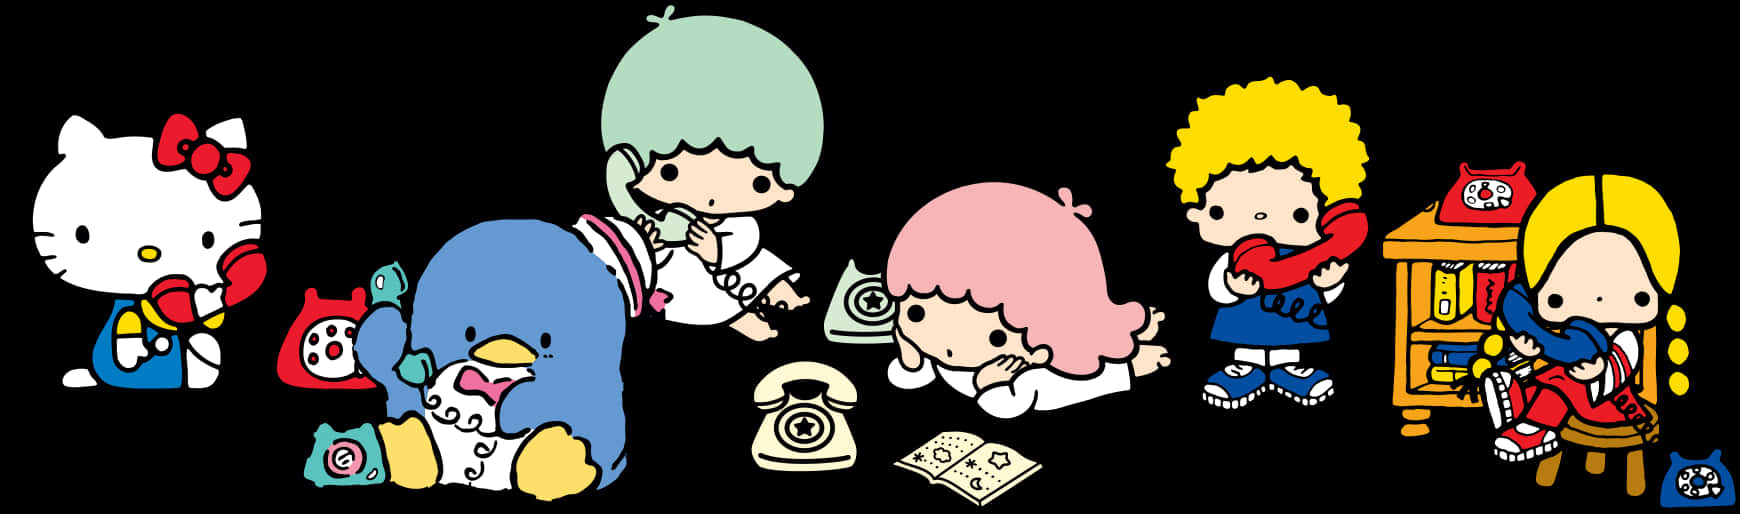 Cartoon Of Two Girls